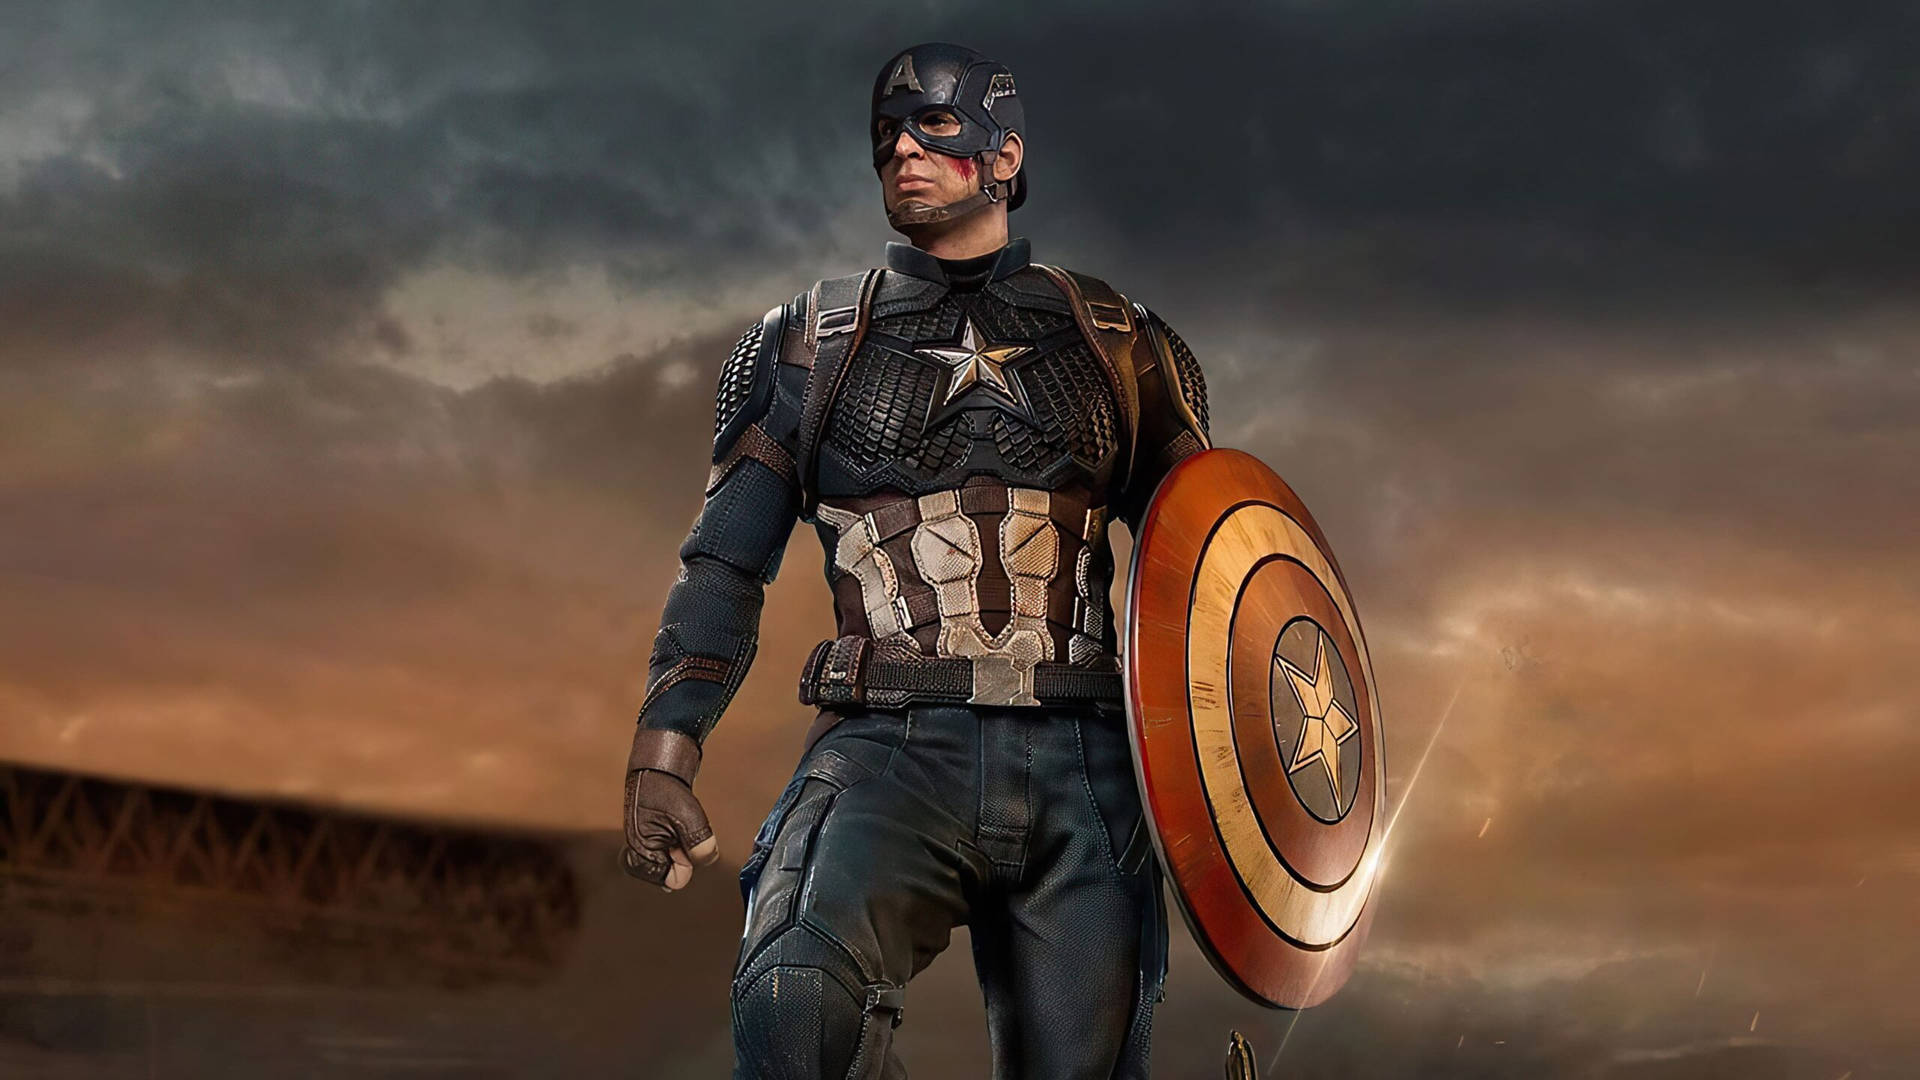 Captain America Superhero Landscape Movie Poster Background